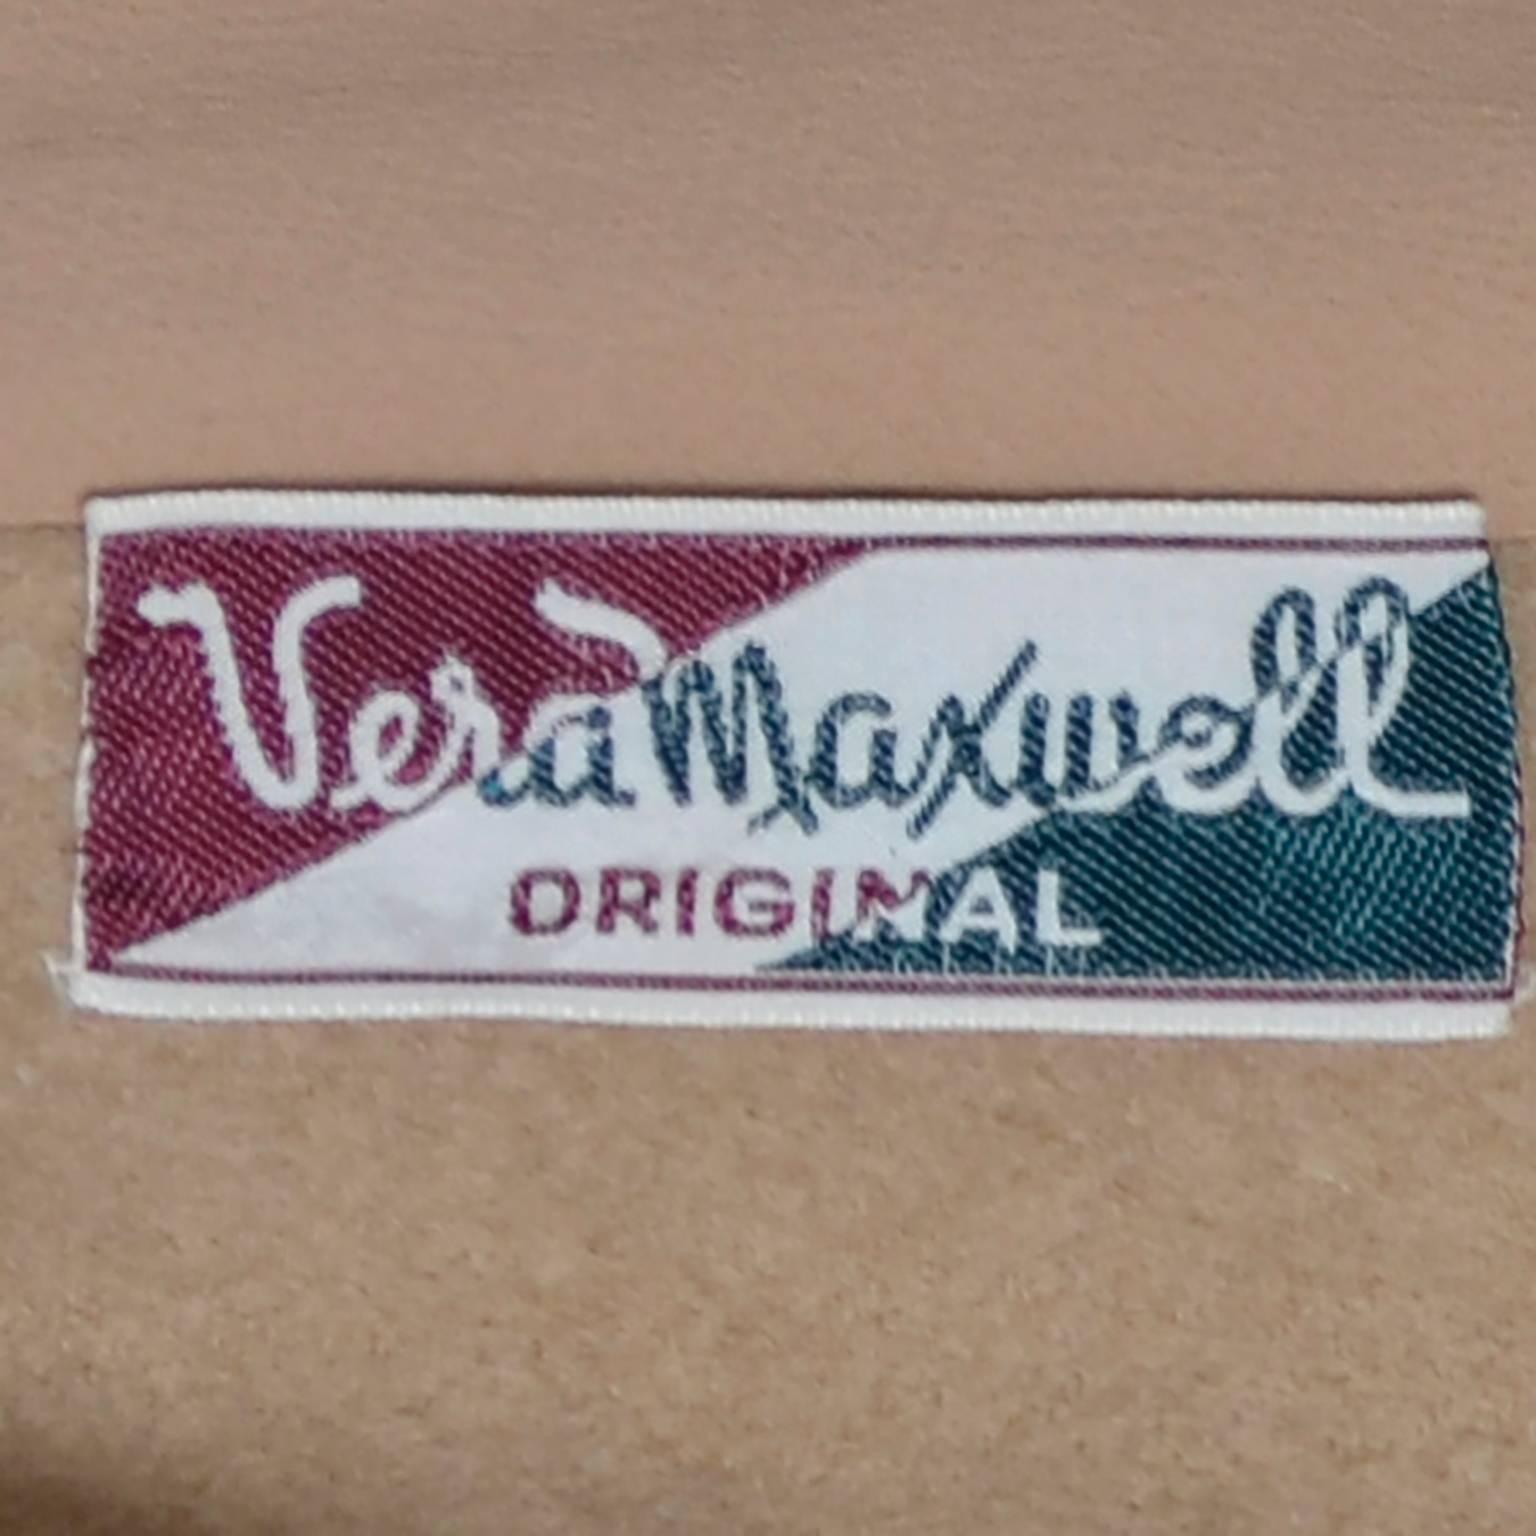 vera maxwell 1940s fashion